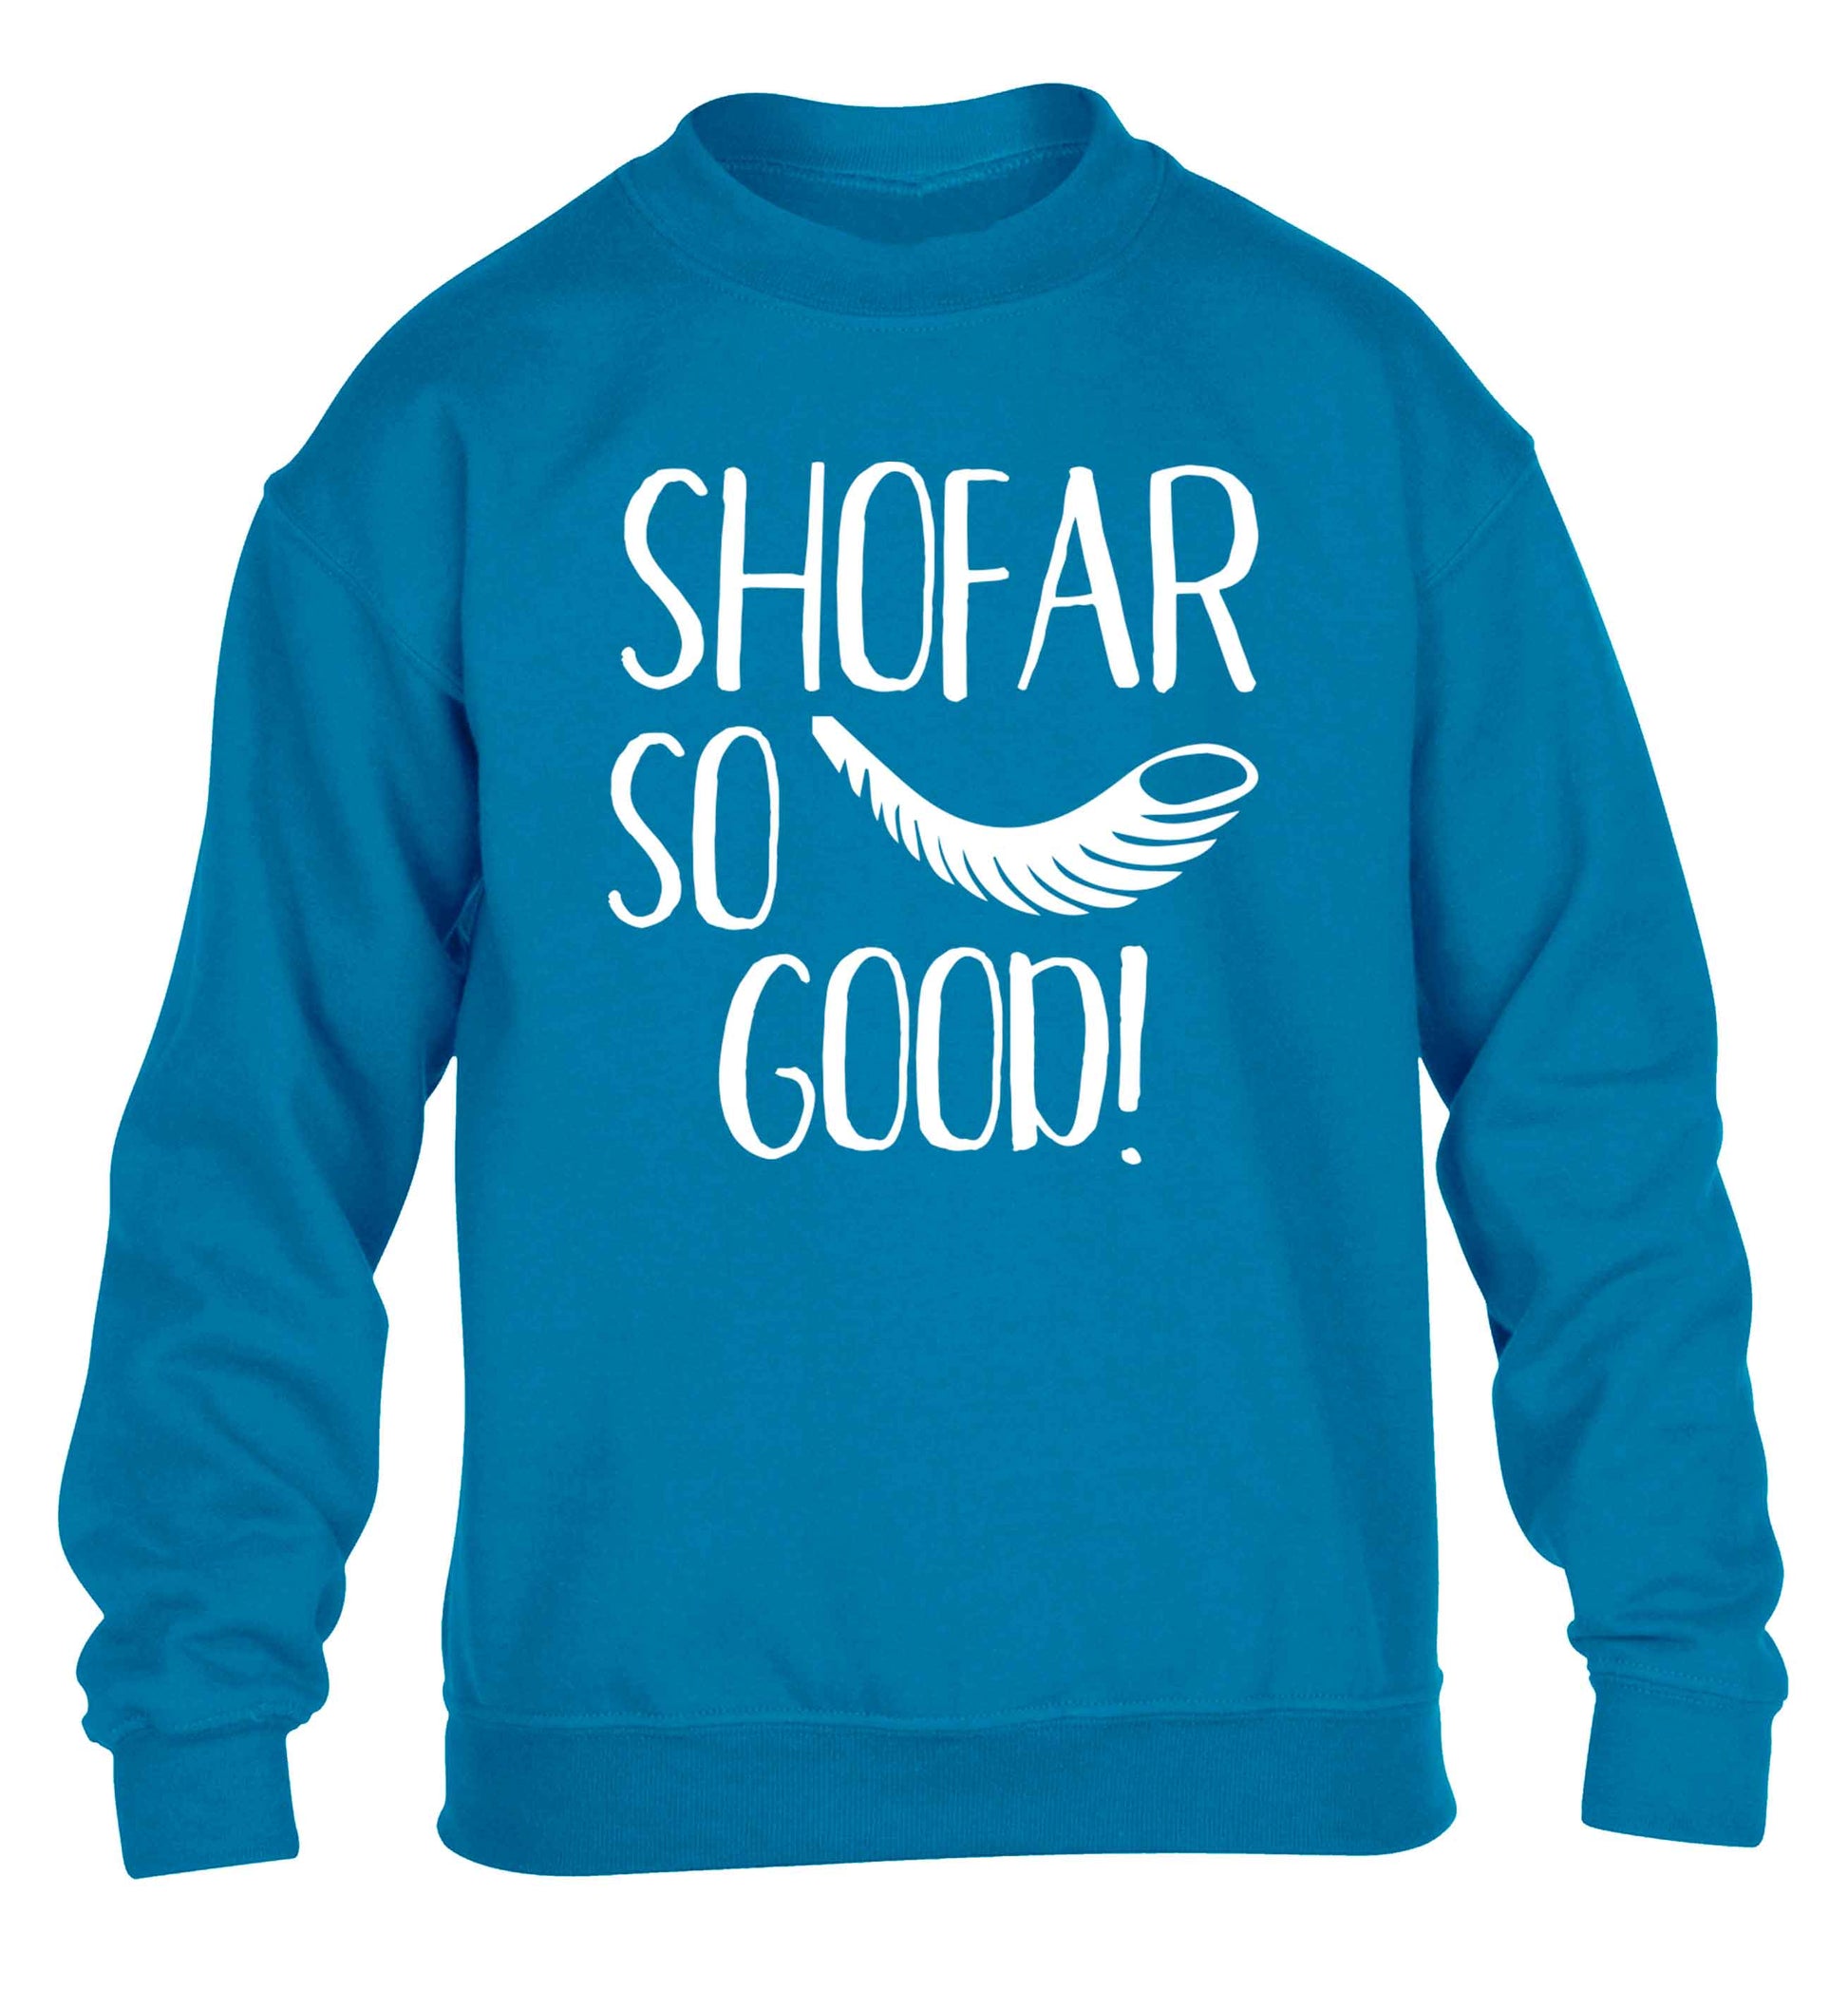 Shofar so good! children's blue sweater 12-13 Years